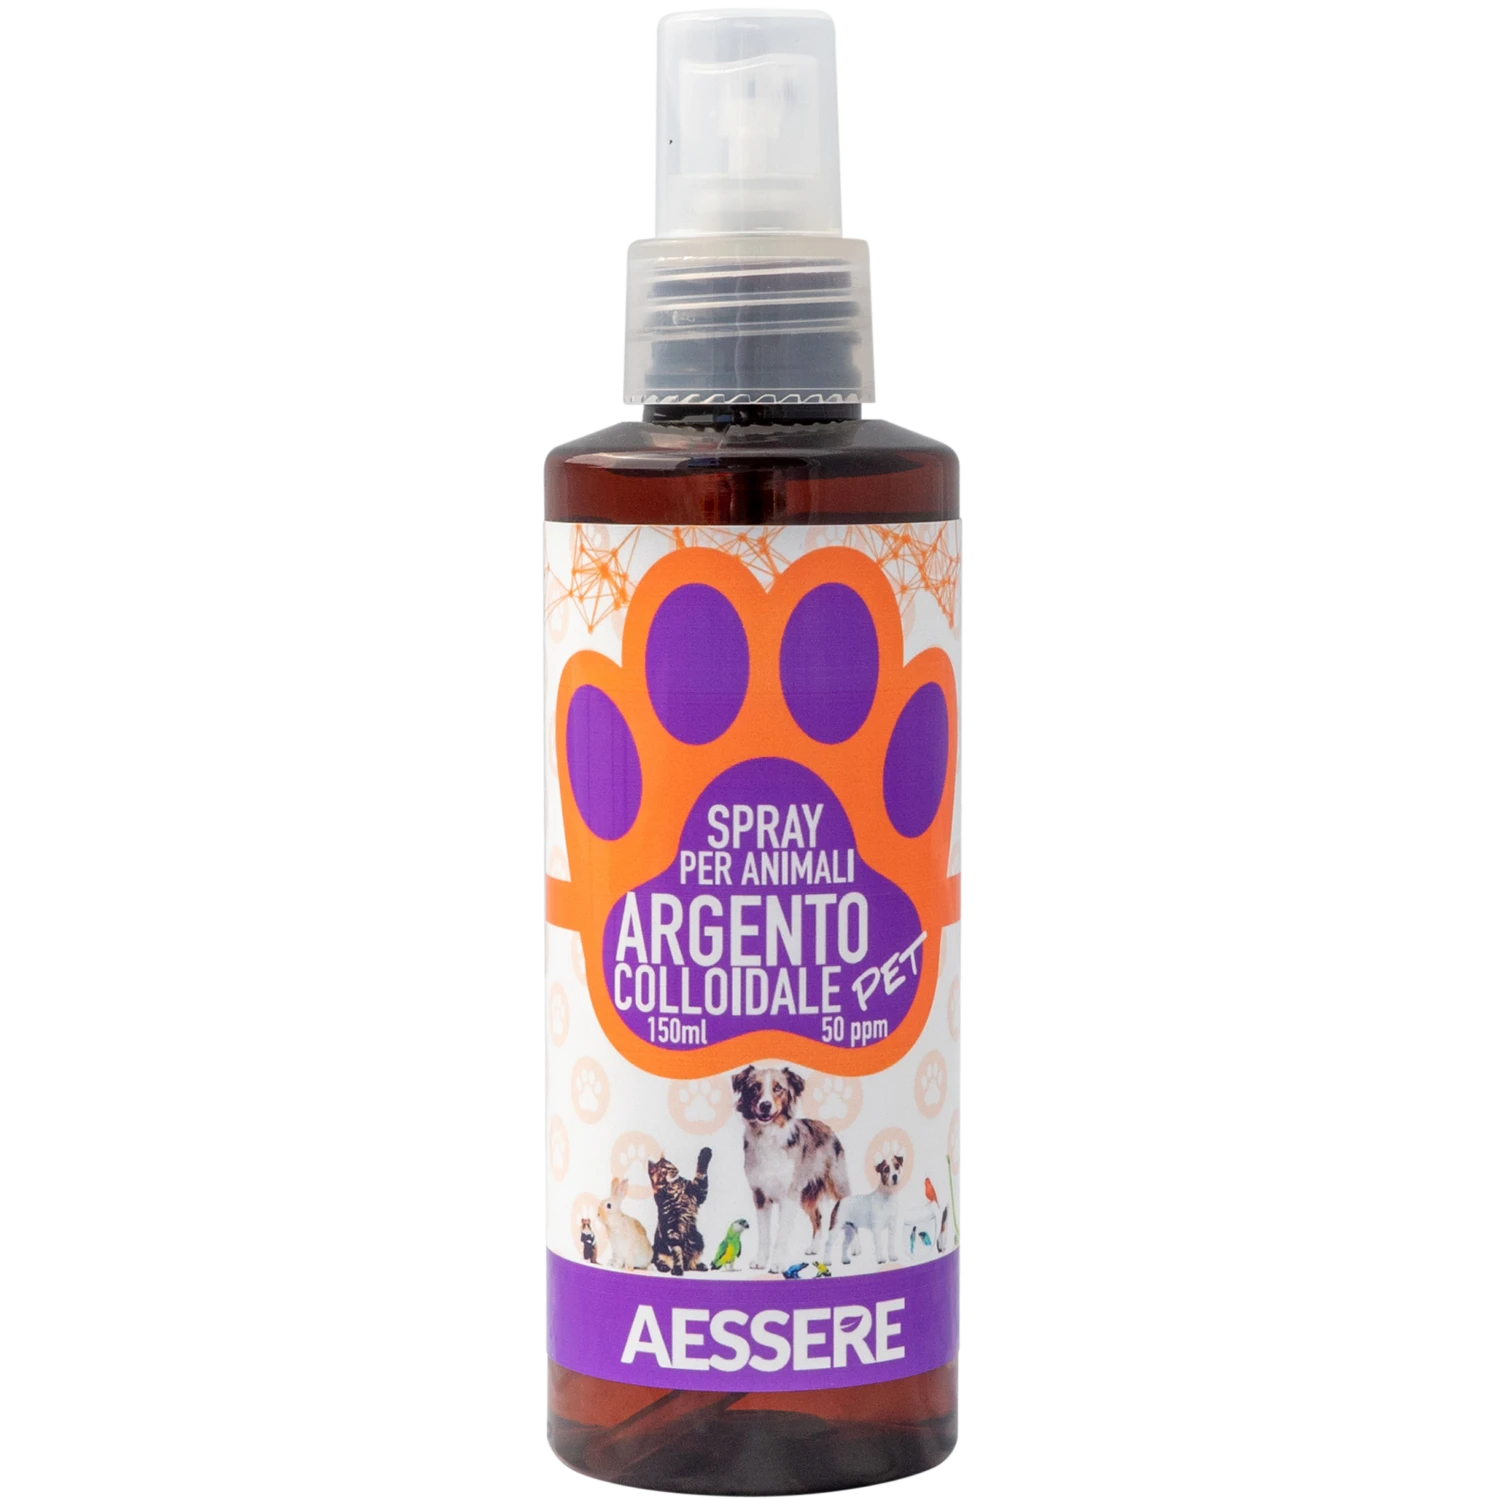 Argento Colloidale PET Spray 50 ppm 150 ml